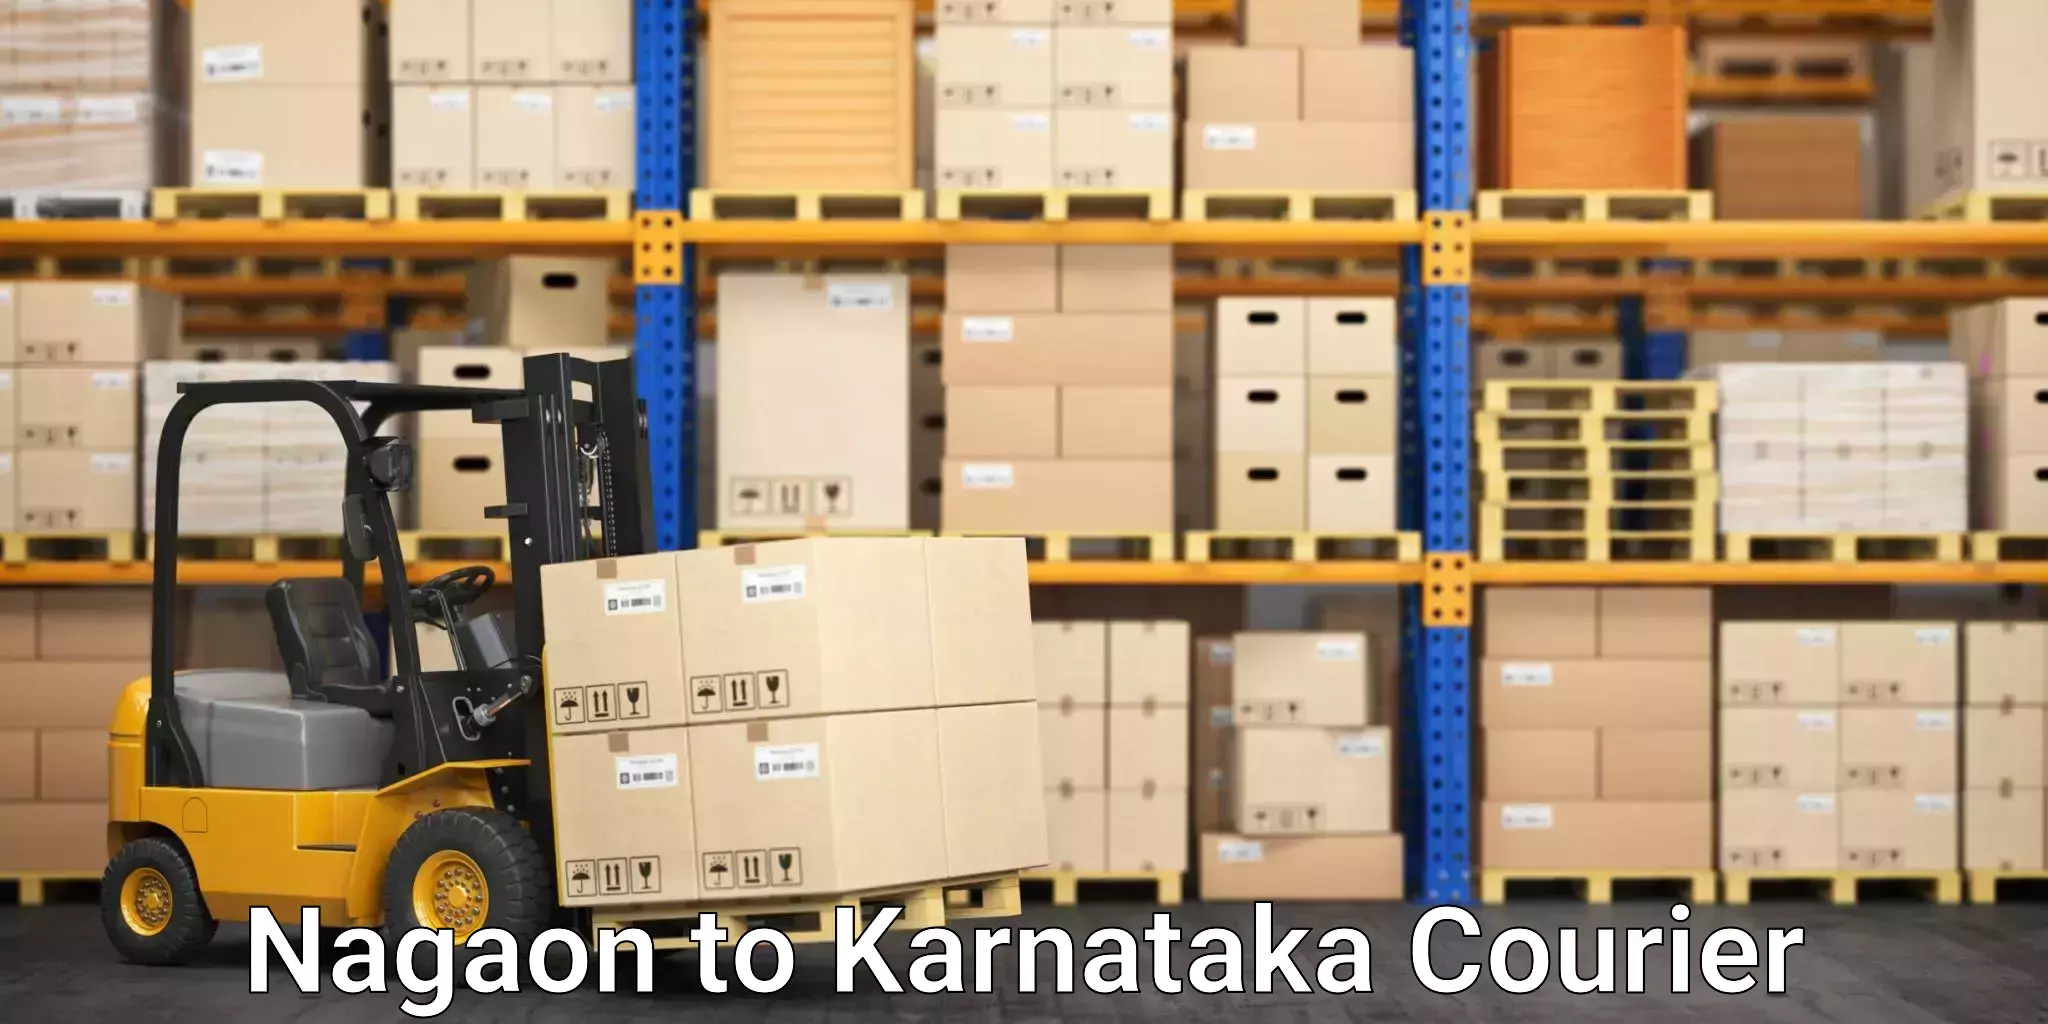 Professional courier handling Nagaon to Karnataka